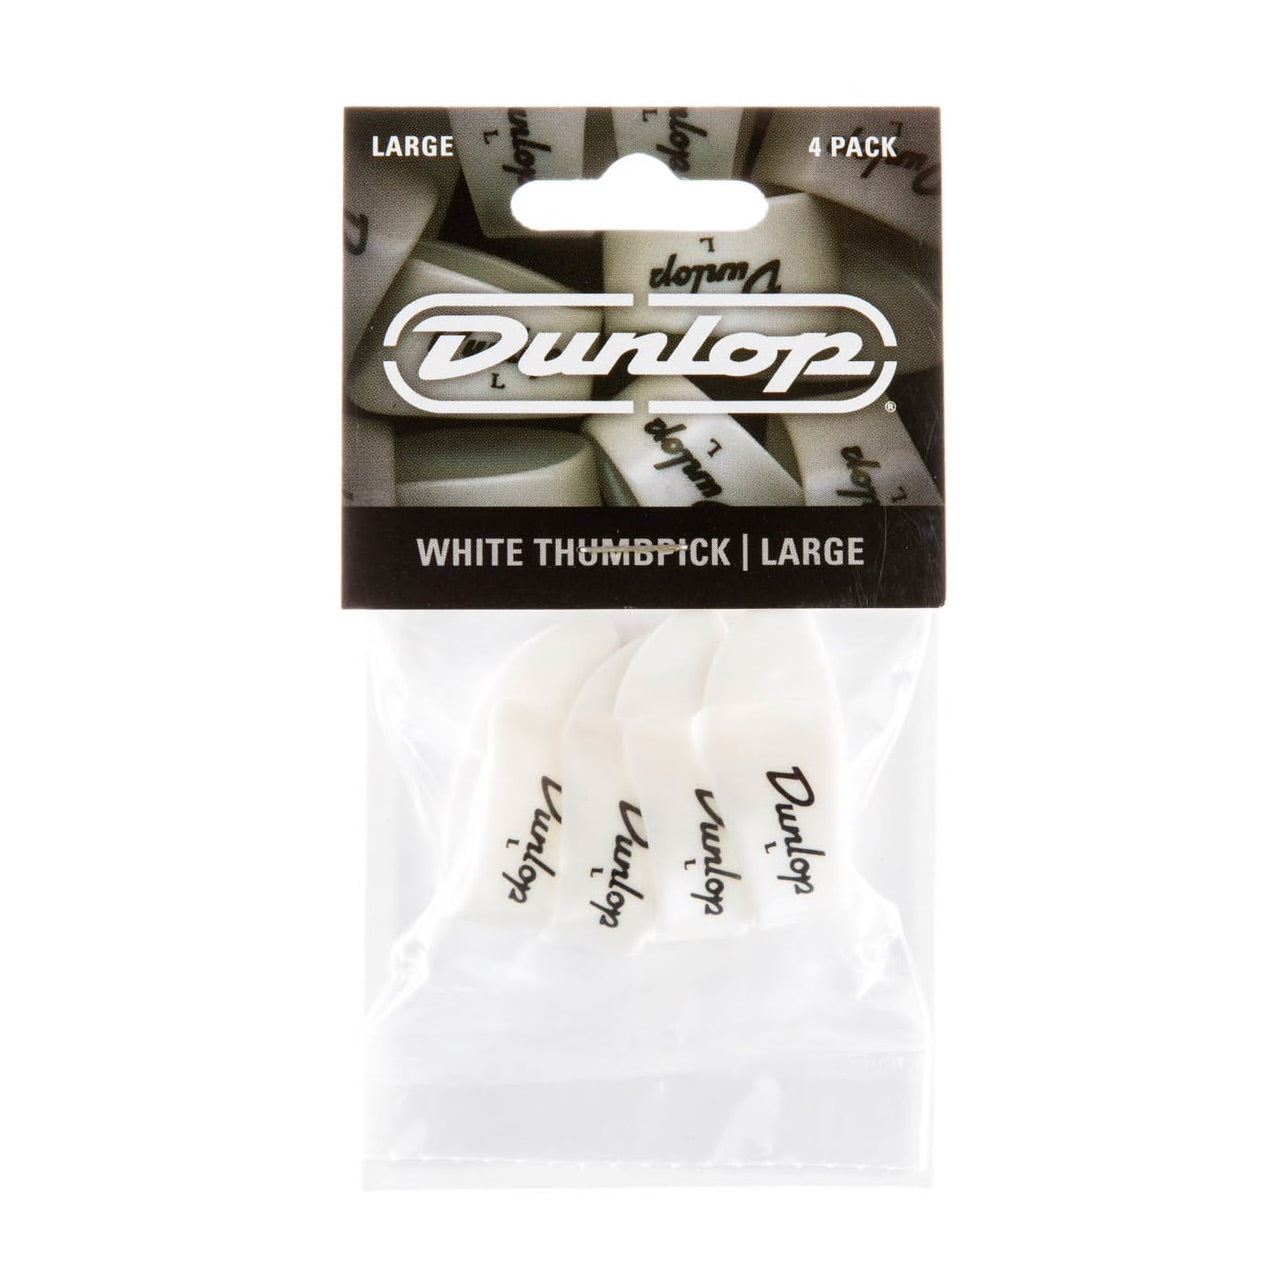 DUNLOP 9003P Large White Plastic Thumbpicks - 4 PACK